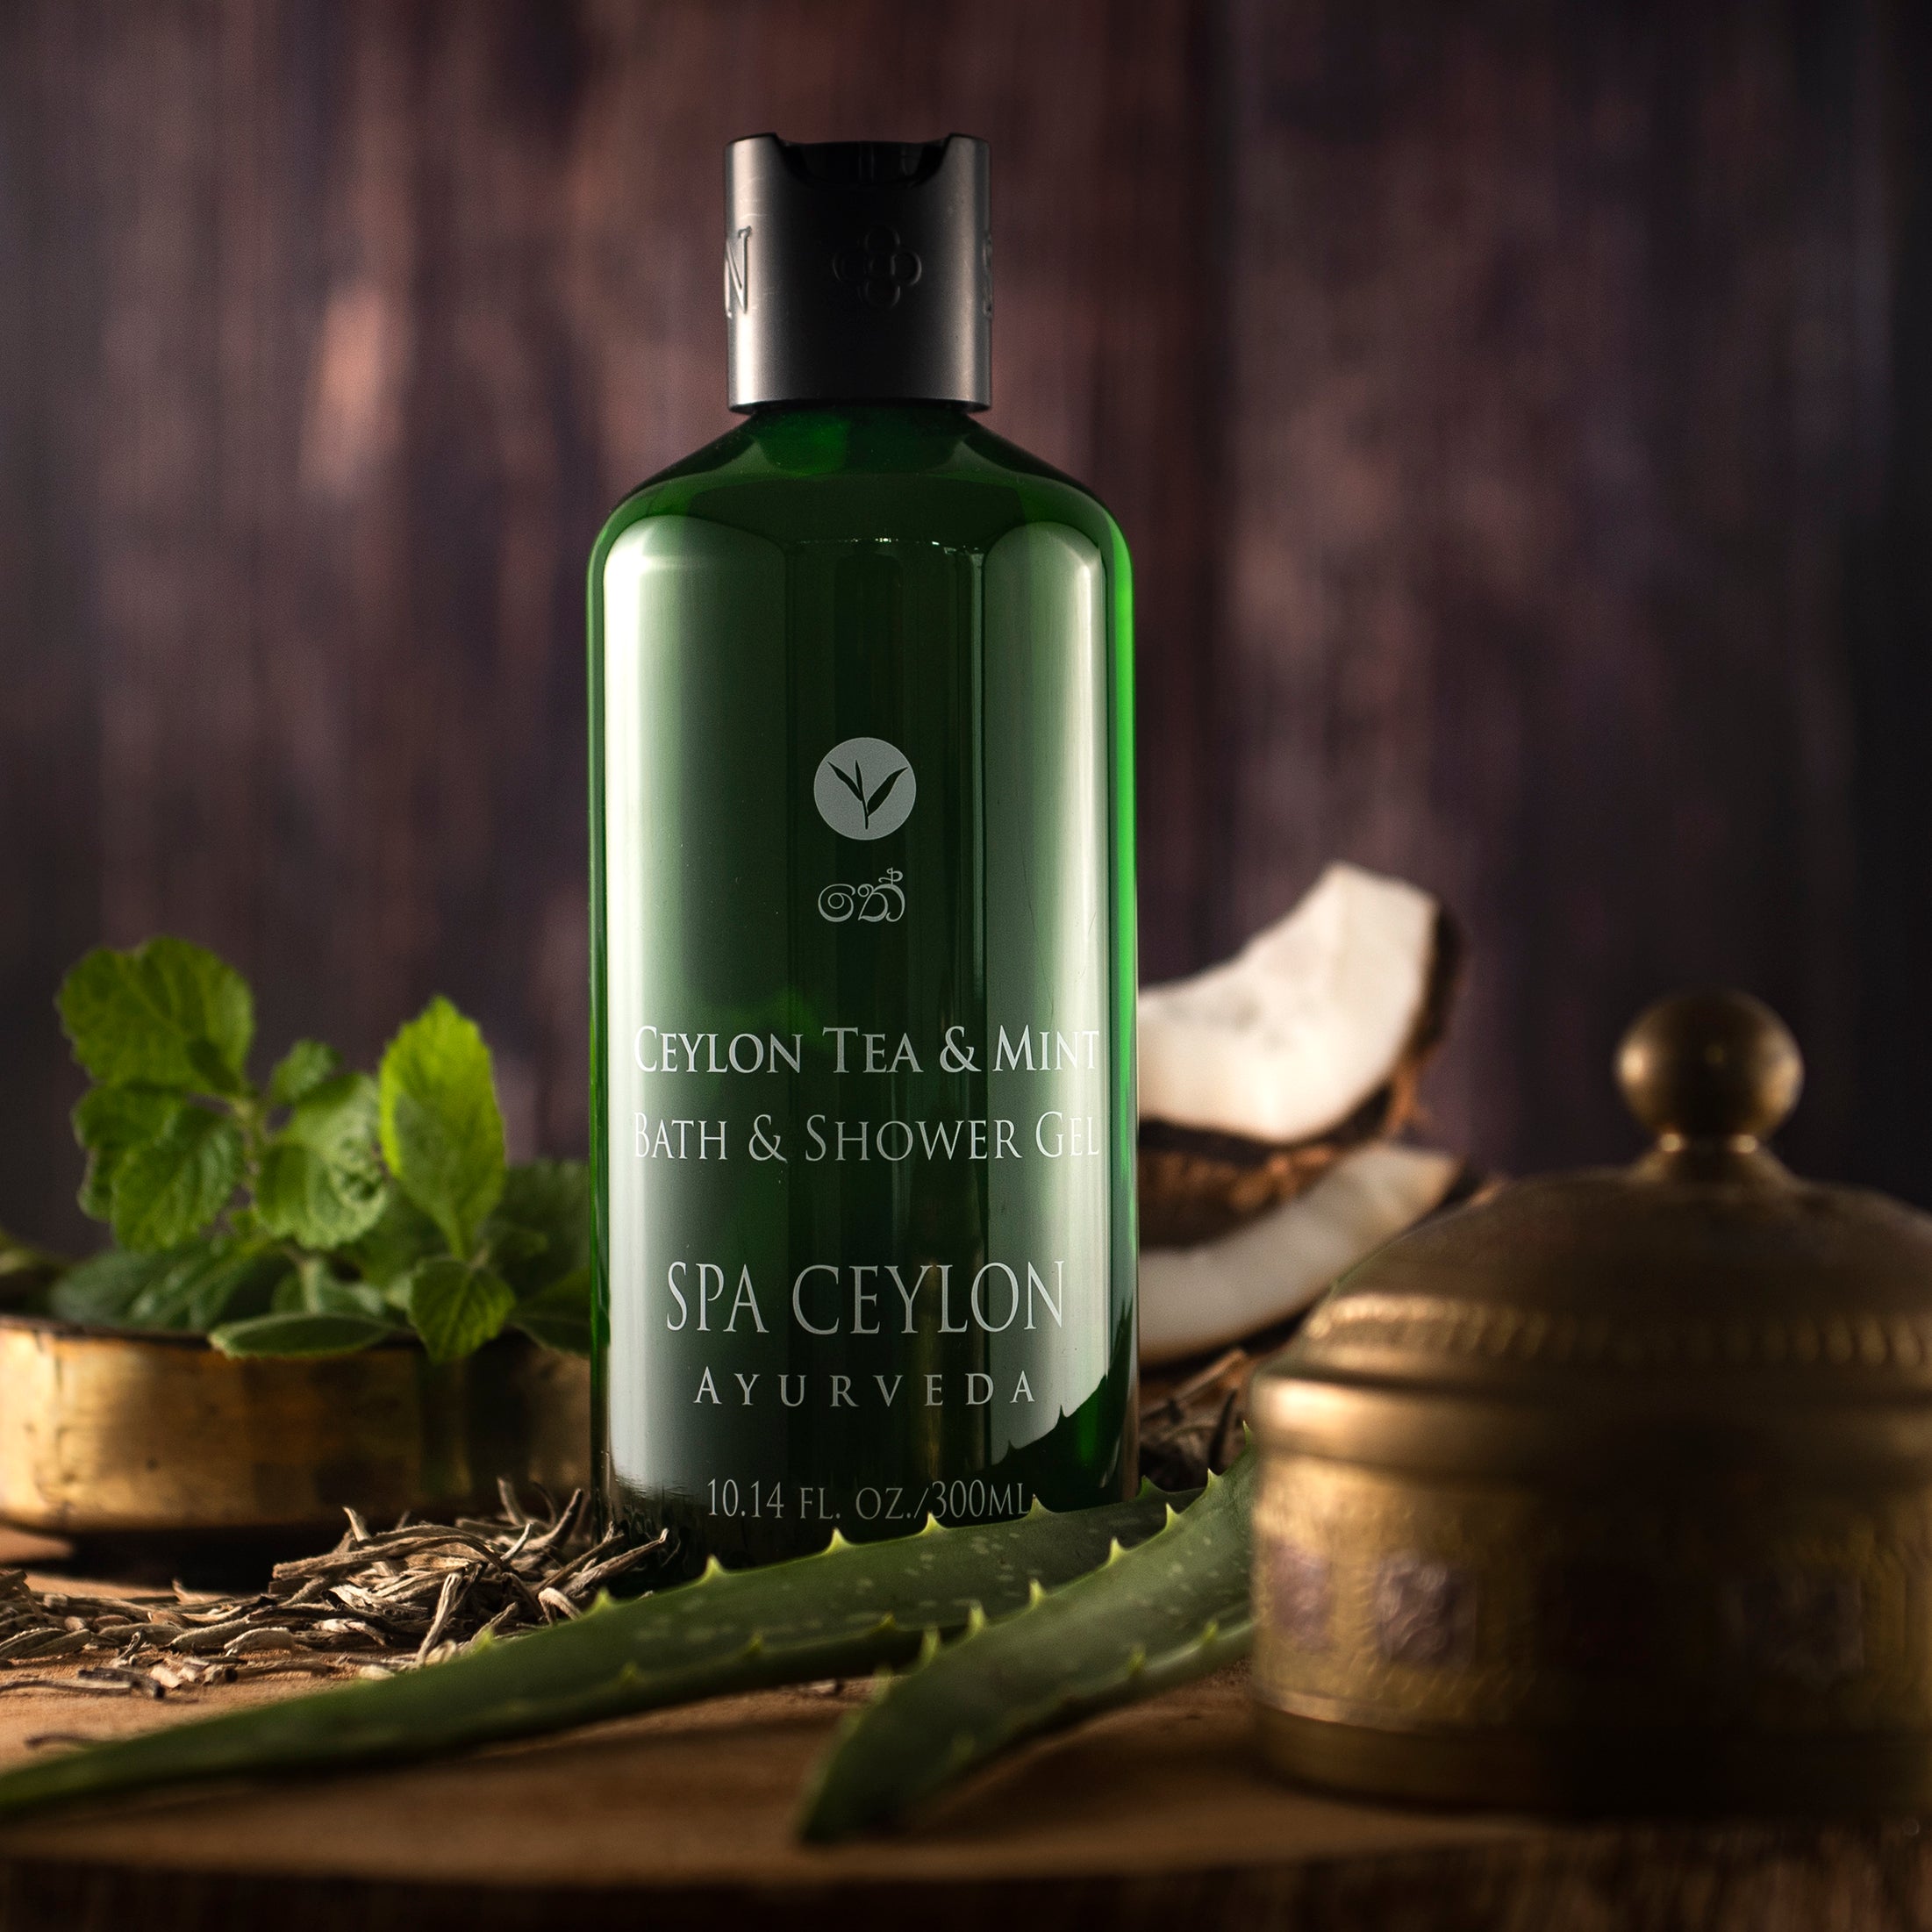 Ceylon Tea & Mint - Bath & Shower Gel